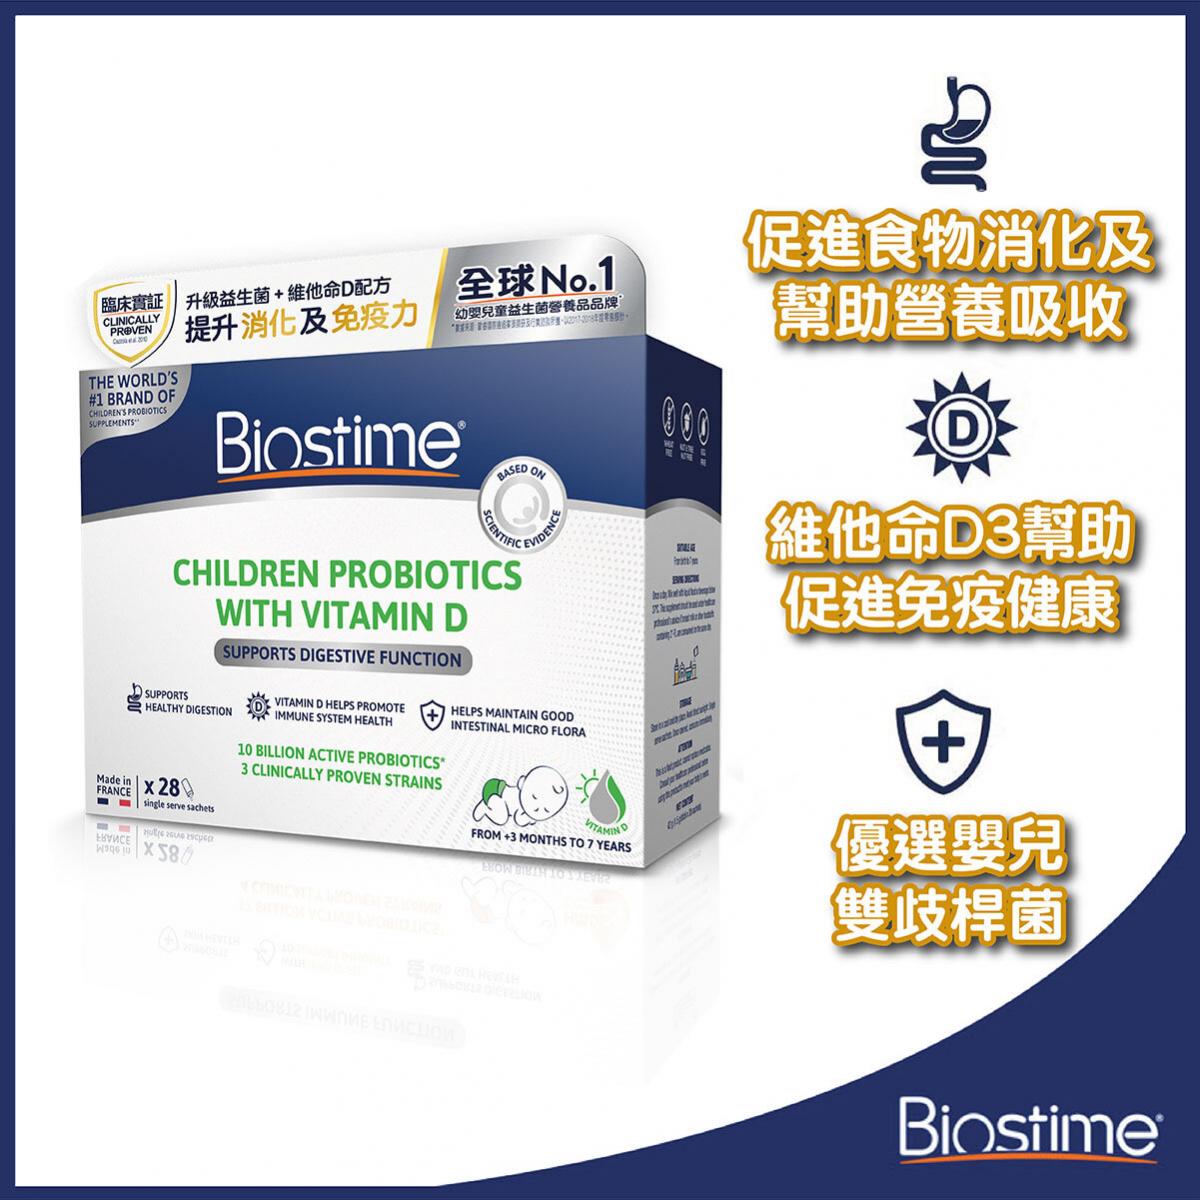 Children’s Probiotics with Vitamin D (Kids probiotics) 28 packs (Best before: 2025-06)